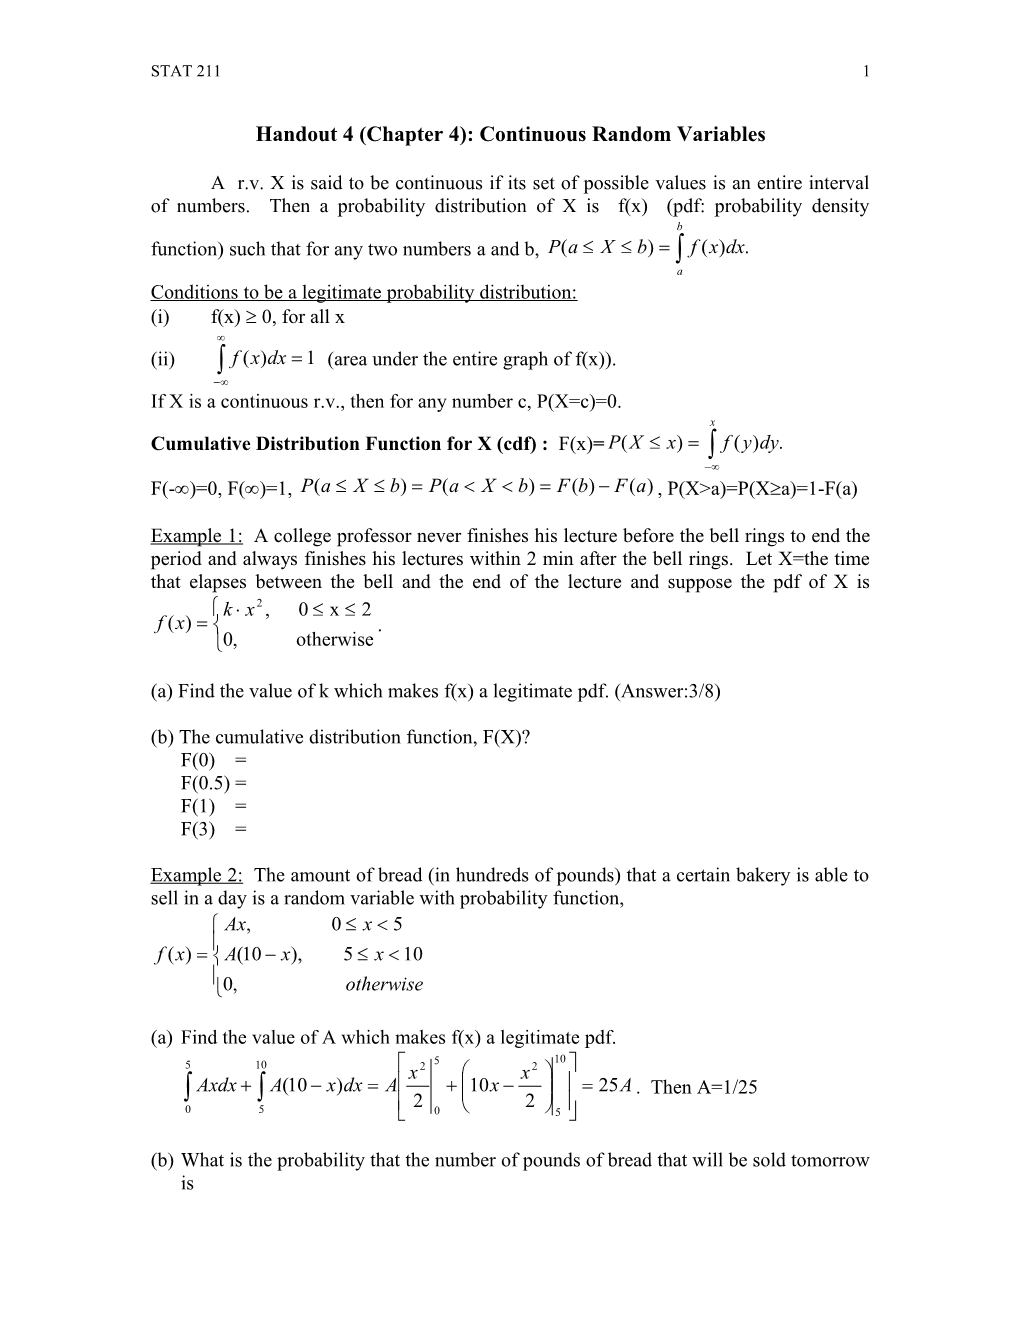 Handout 4 (Chapter 4): Continuous Random Variables